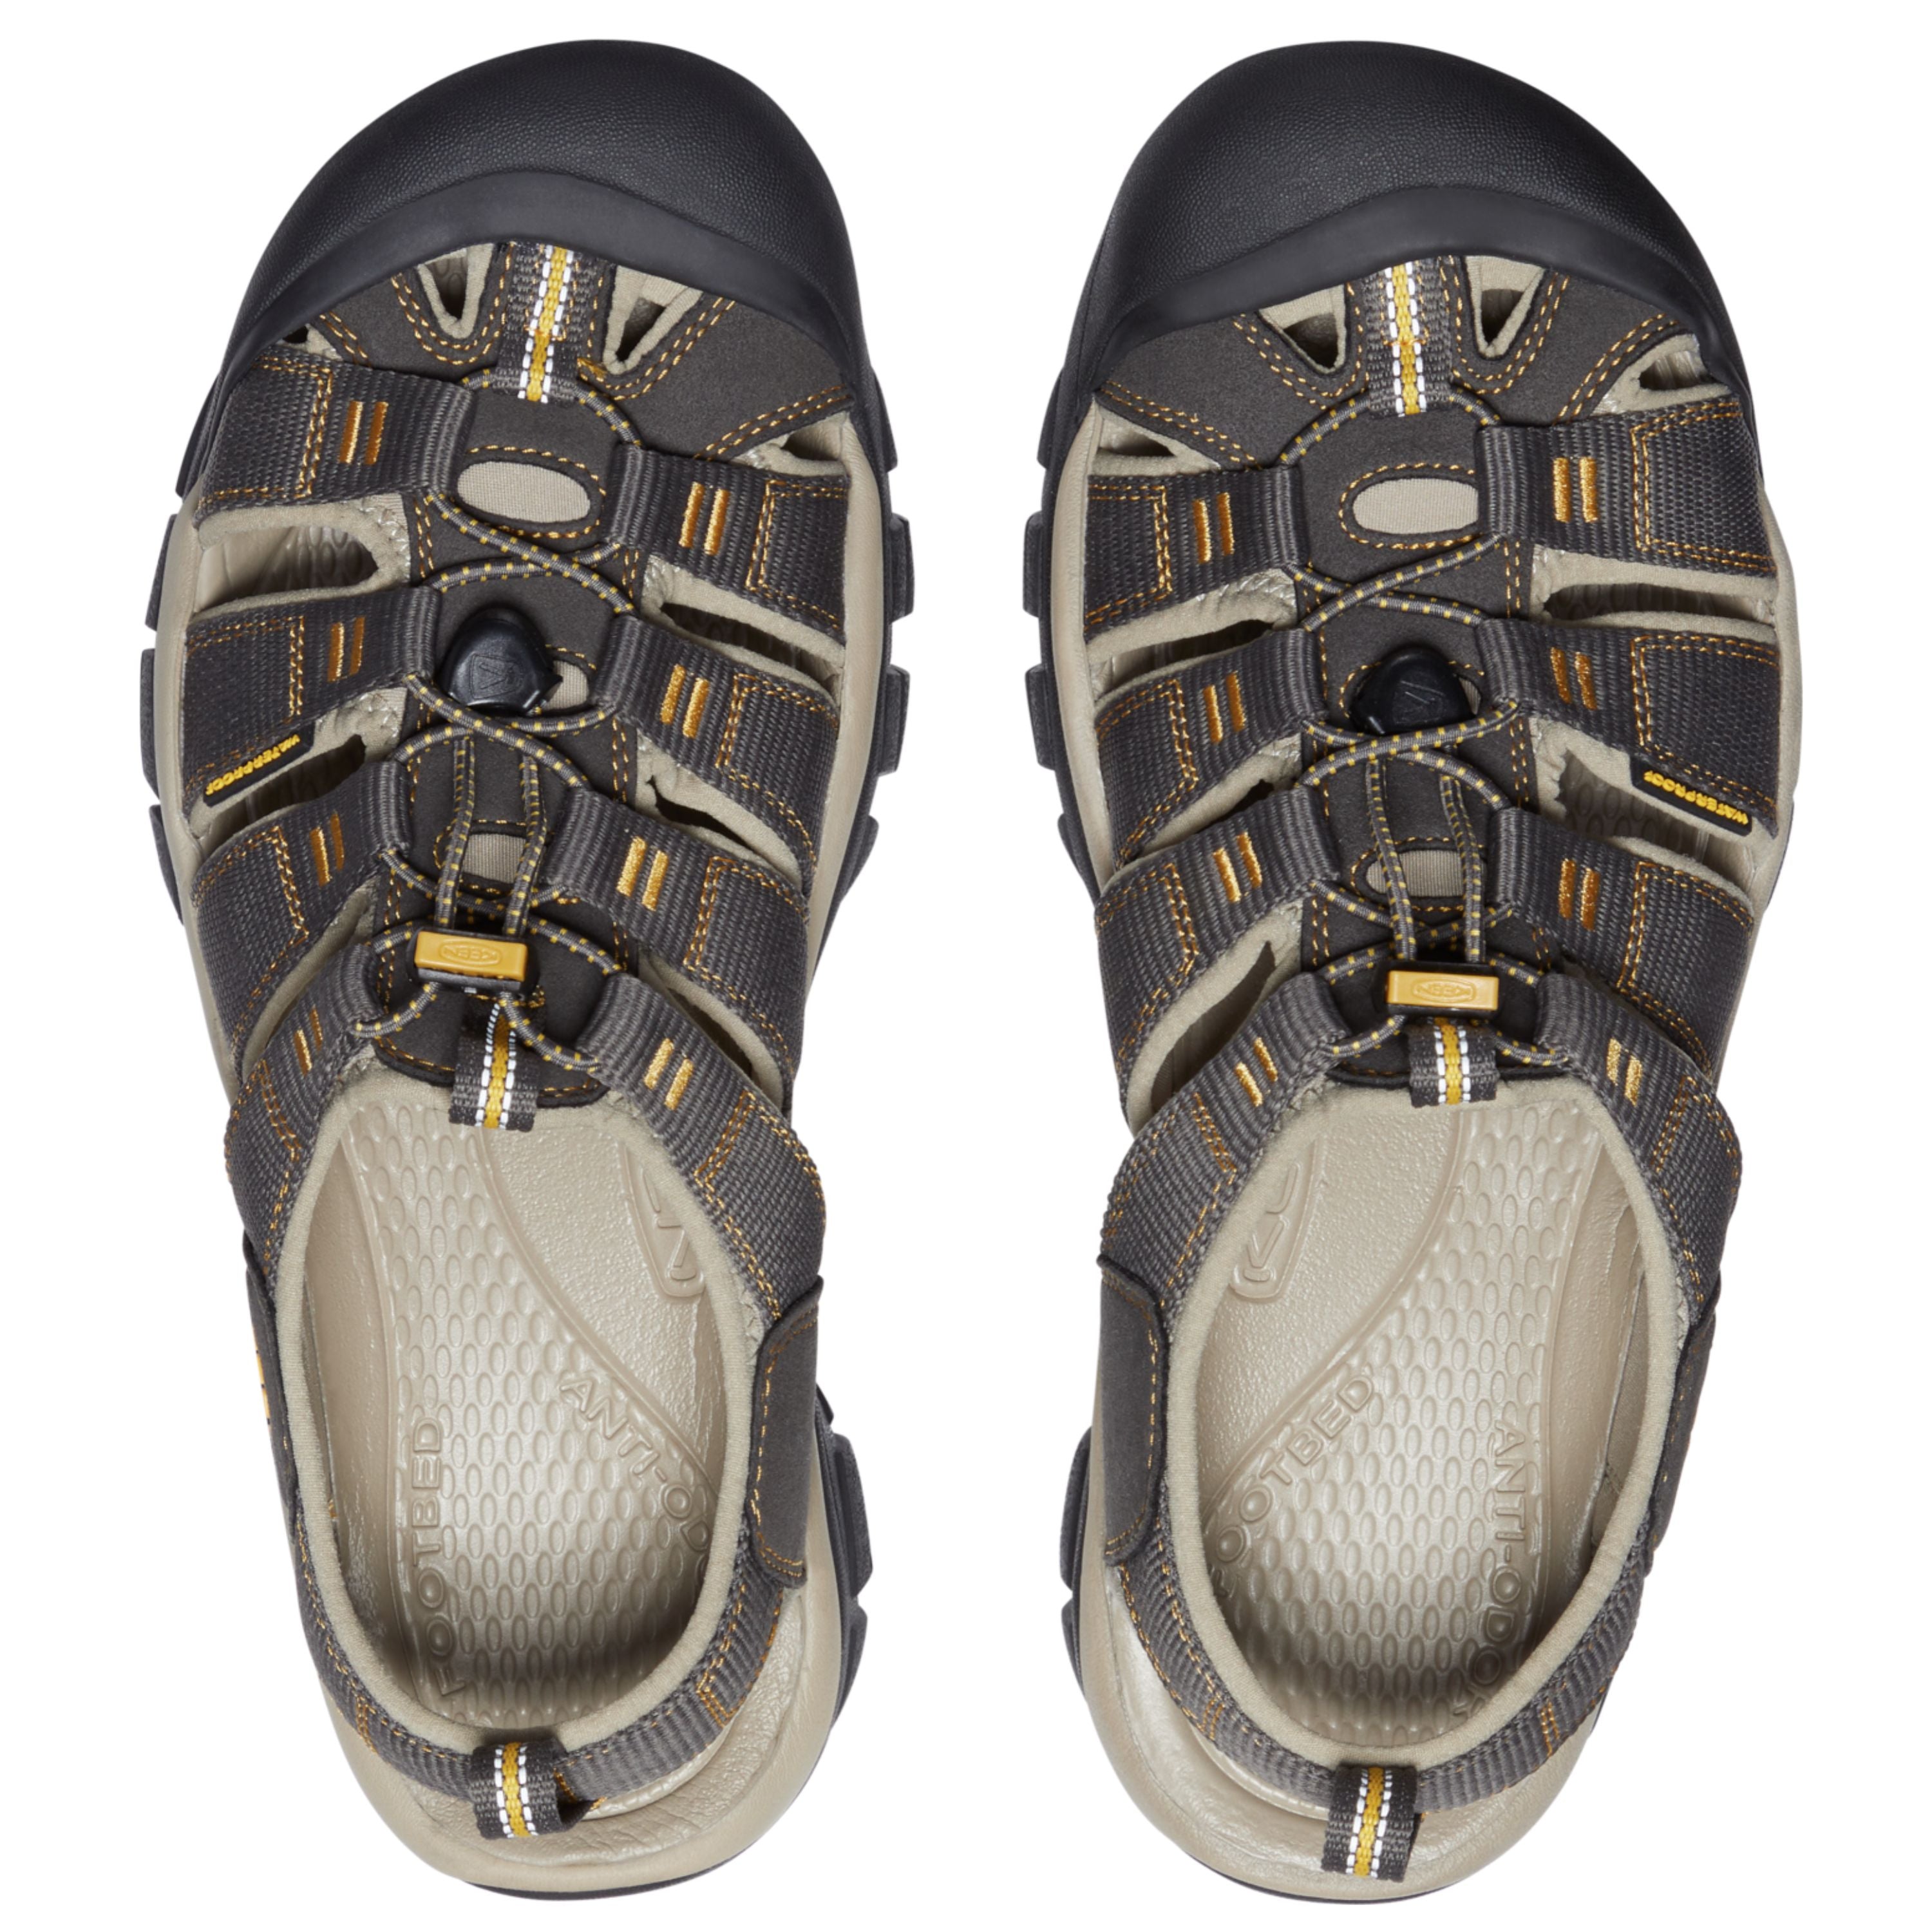 "Newport H2" Sandals - Men's